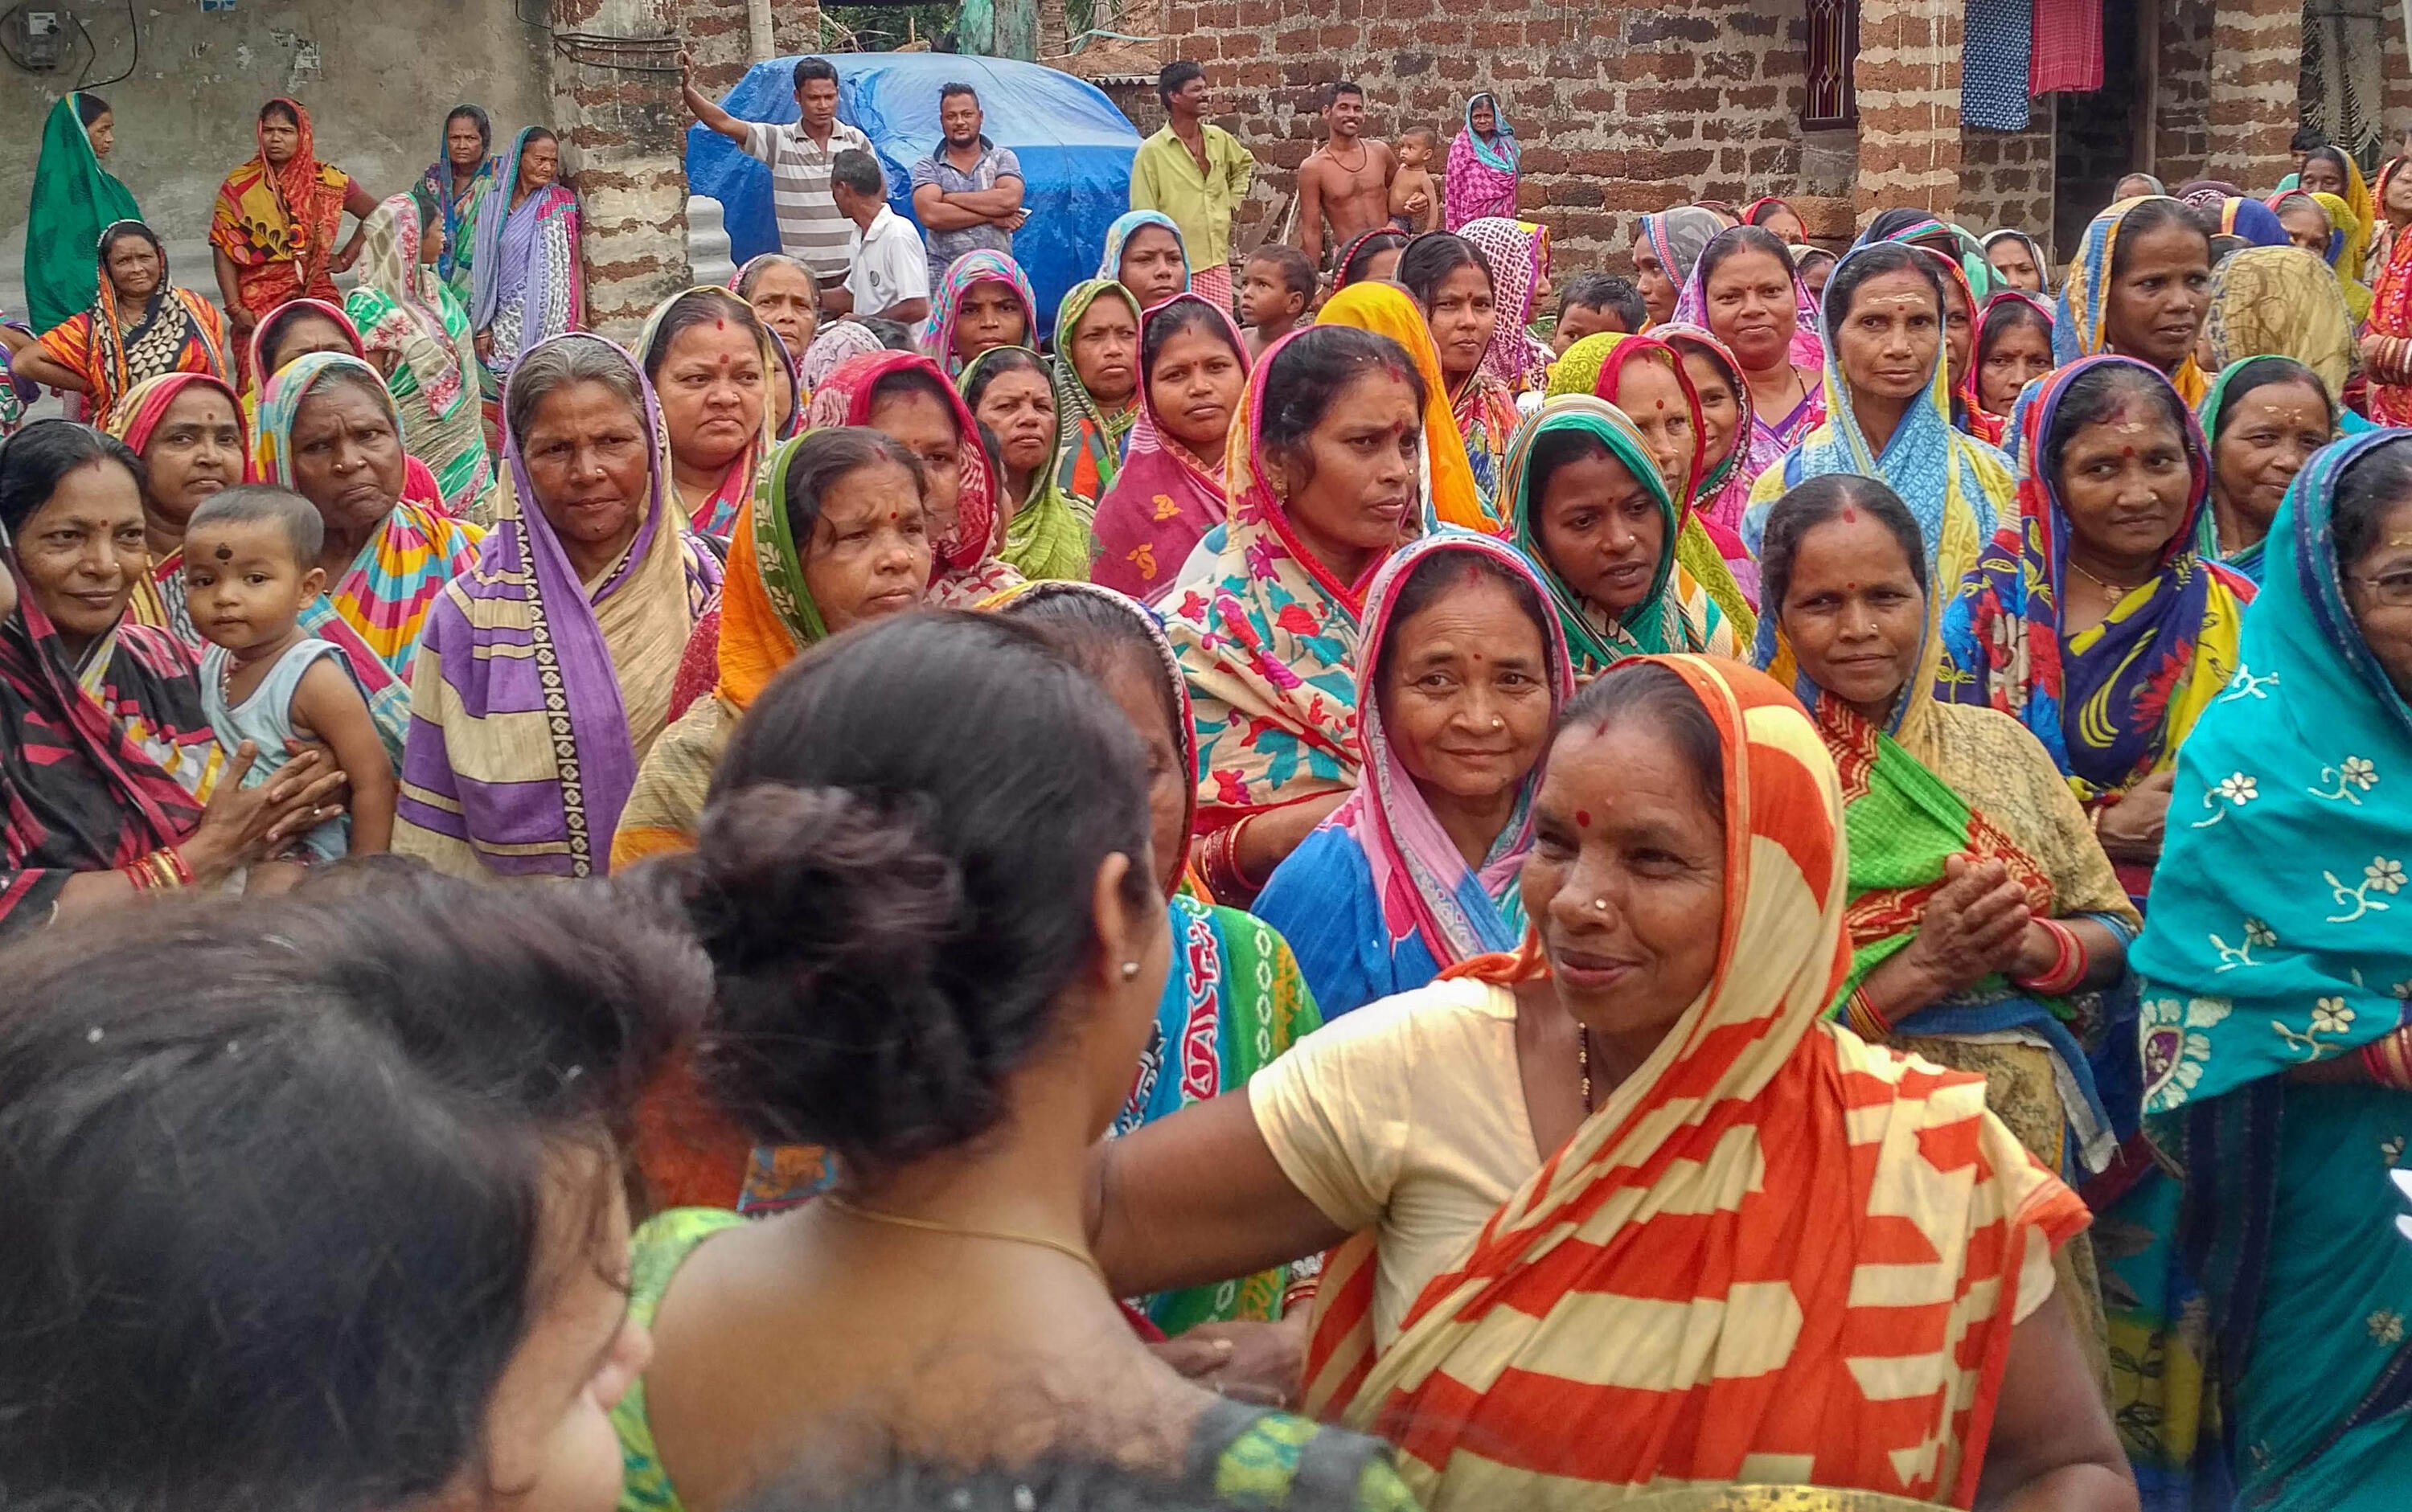 Village women welcoming researchers